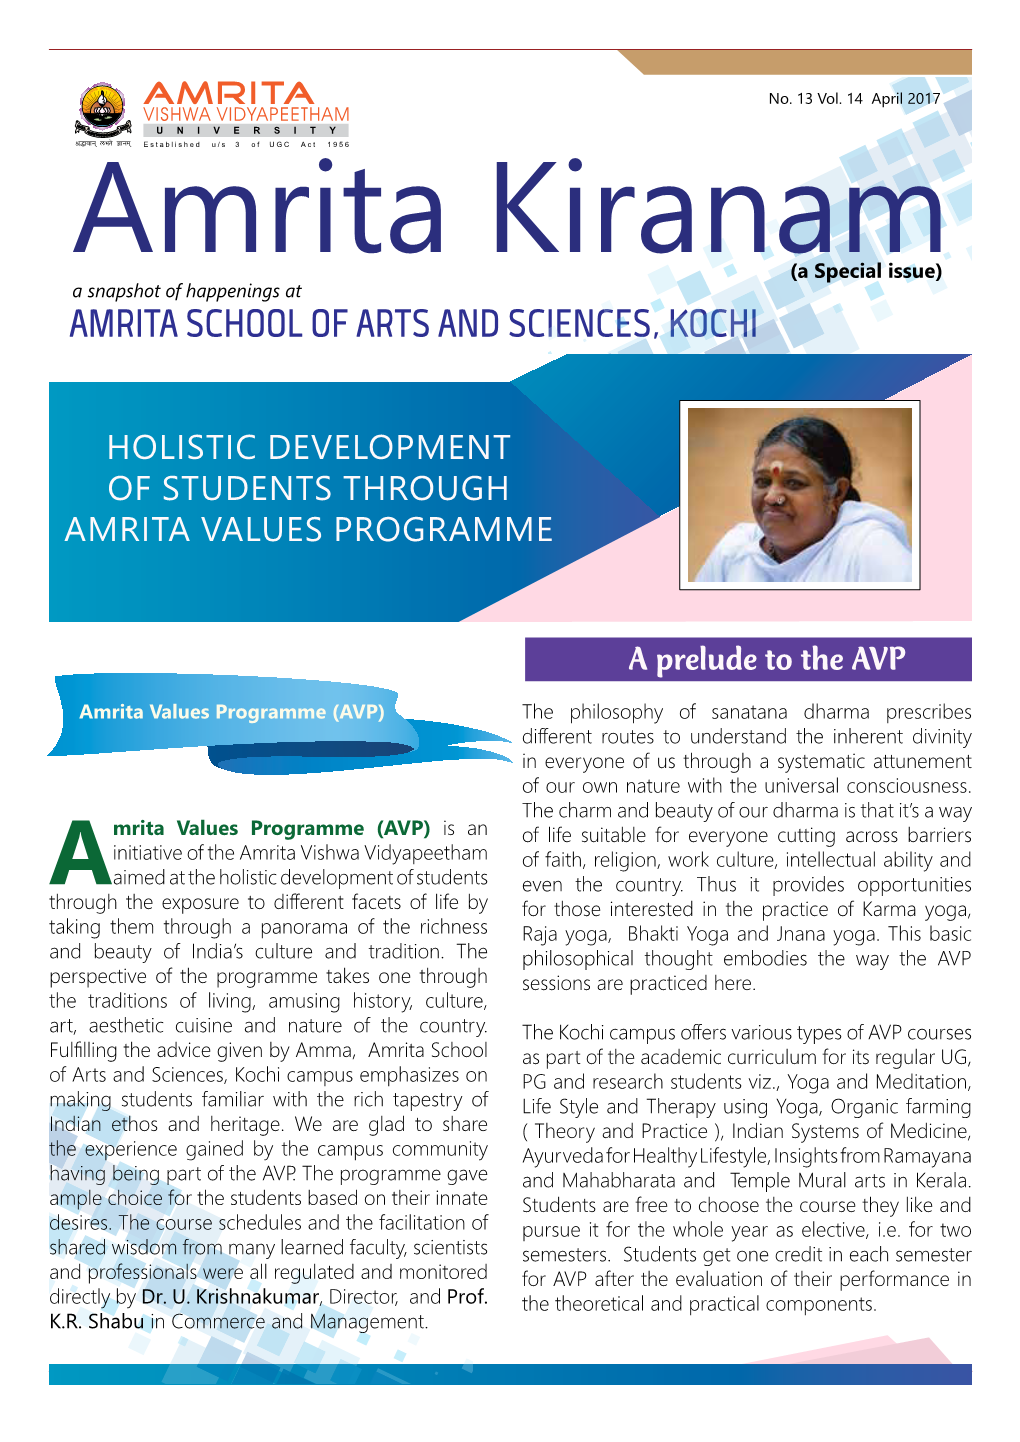 Holistic Development of Students Through AMRITA VALUES Programme